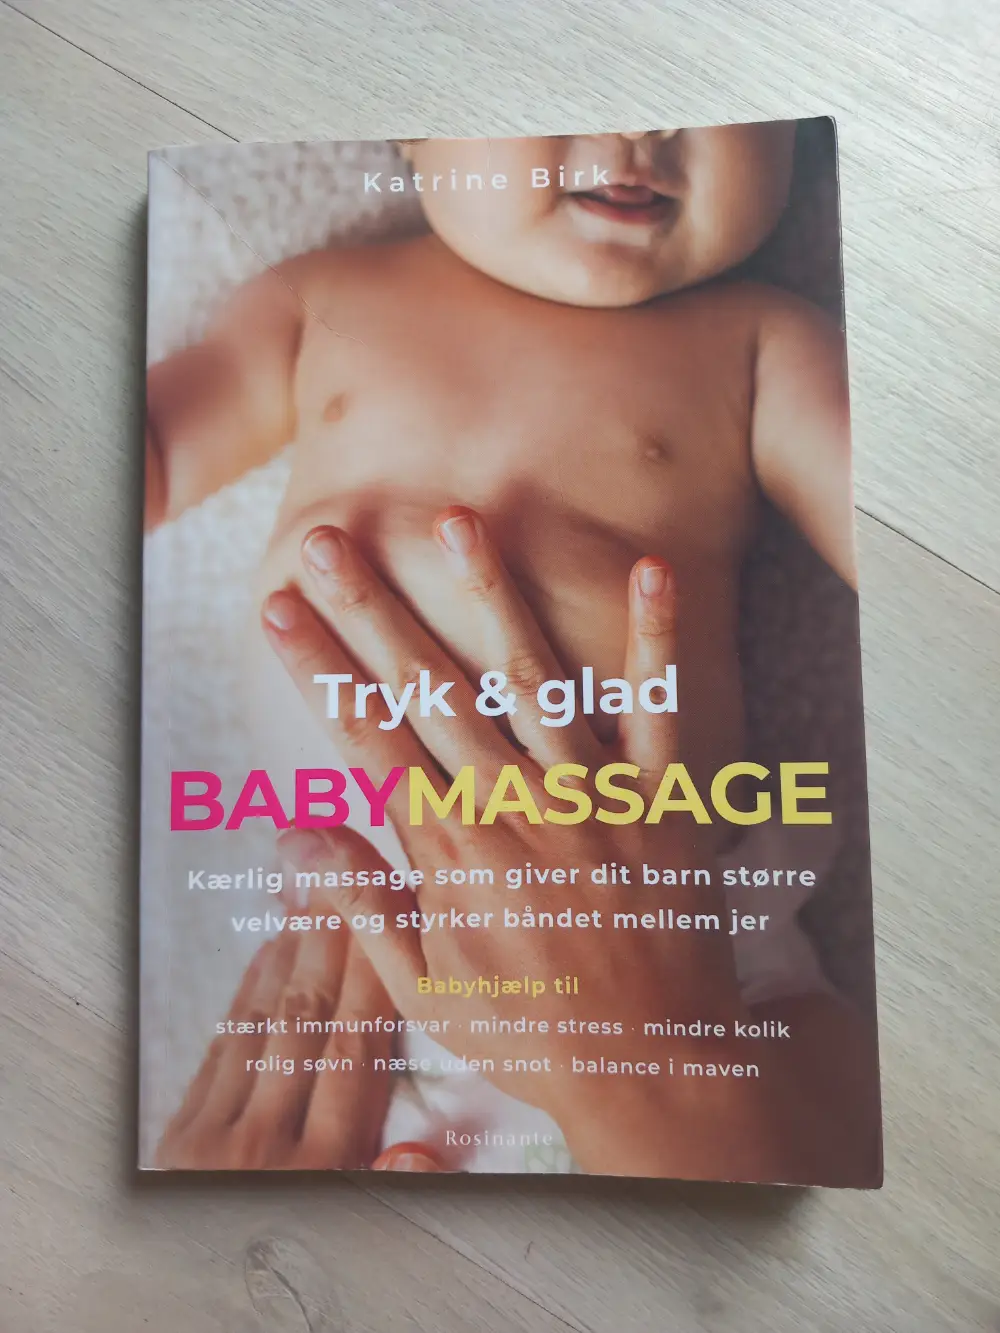 Katrine Birk Tryk  glad babymassage